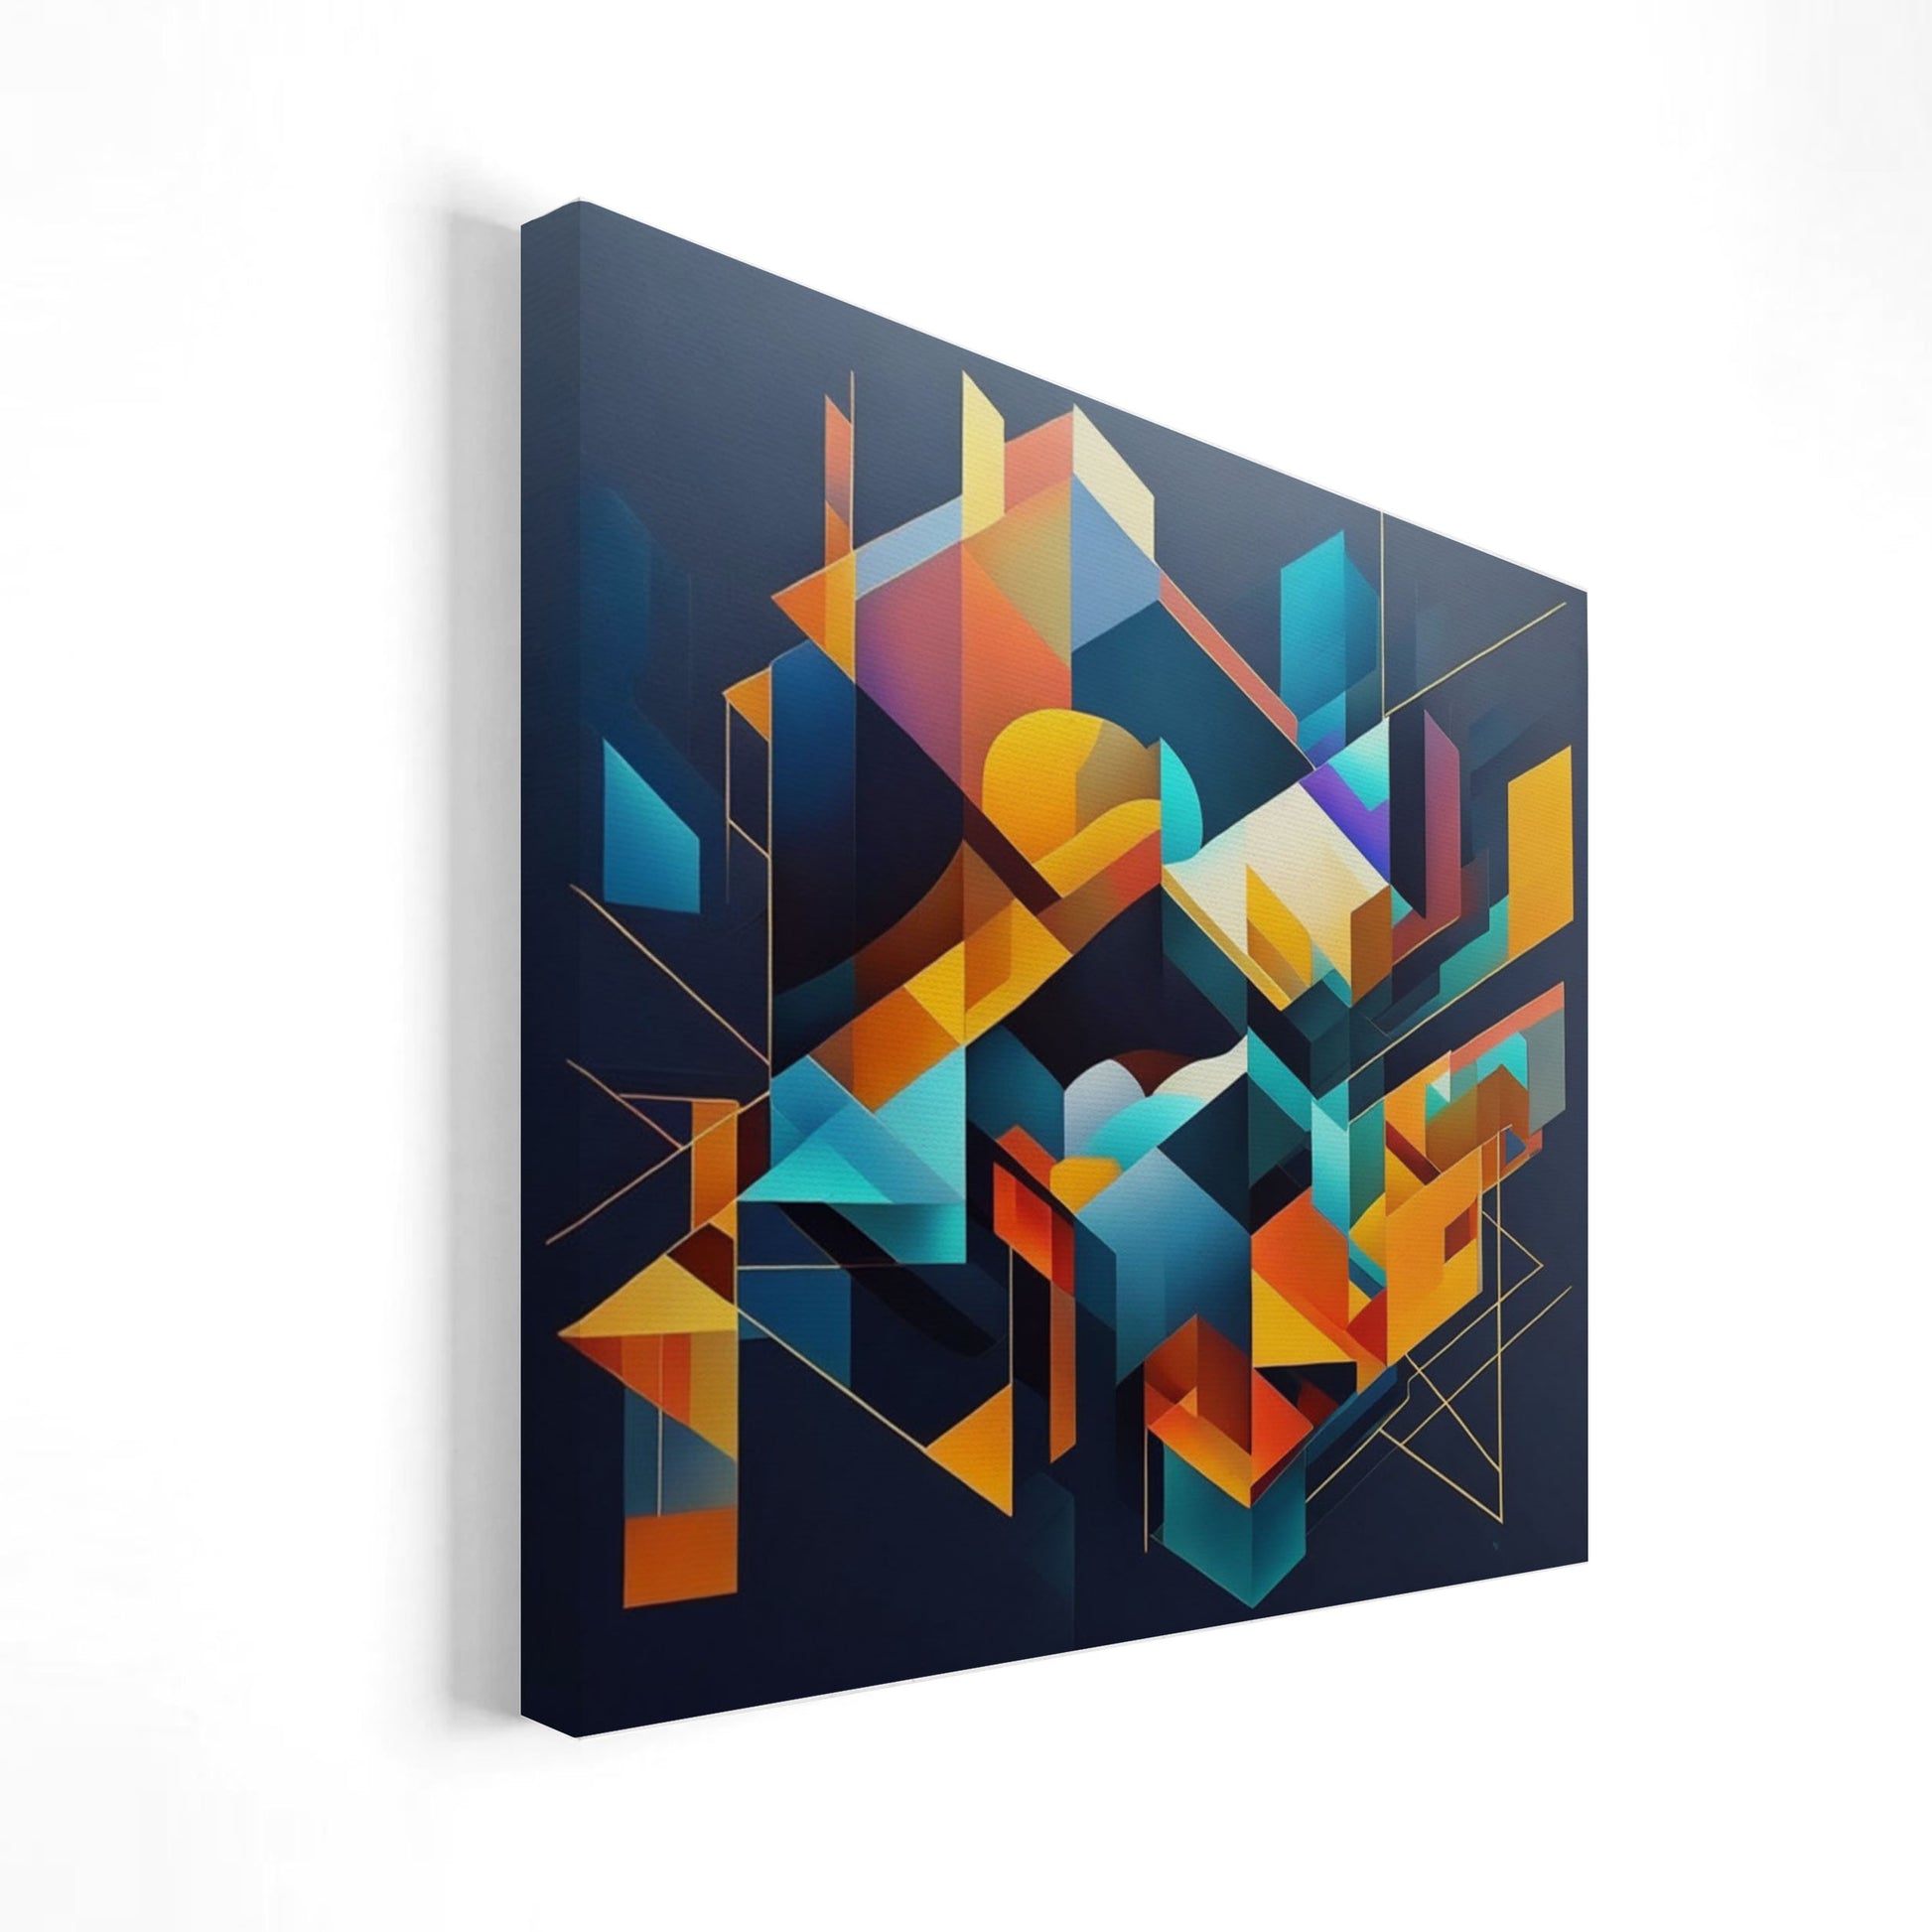 Obra de arte geométrica abstracta con formas vibrantes en azul, naranja, amarillo y púrpura sobre un fondo azul oscuro.